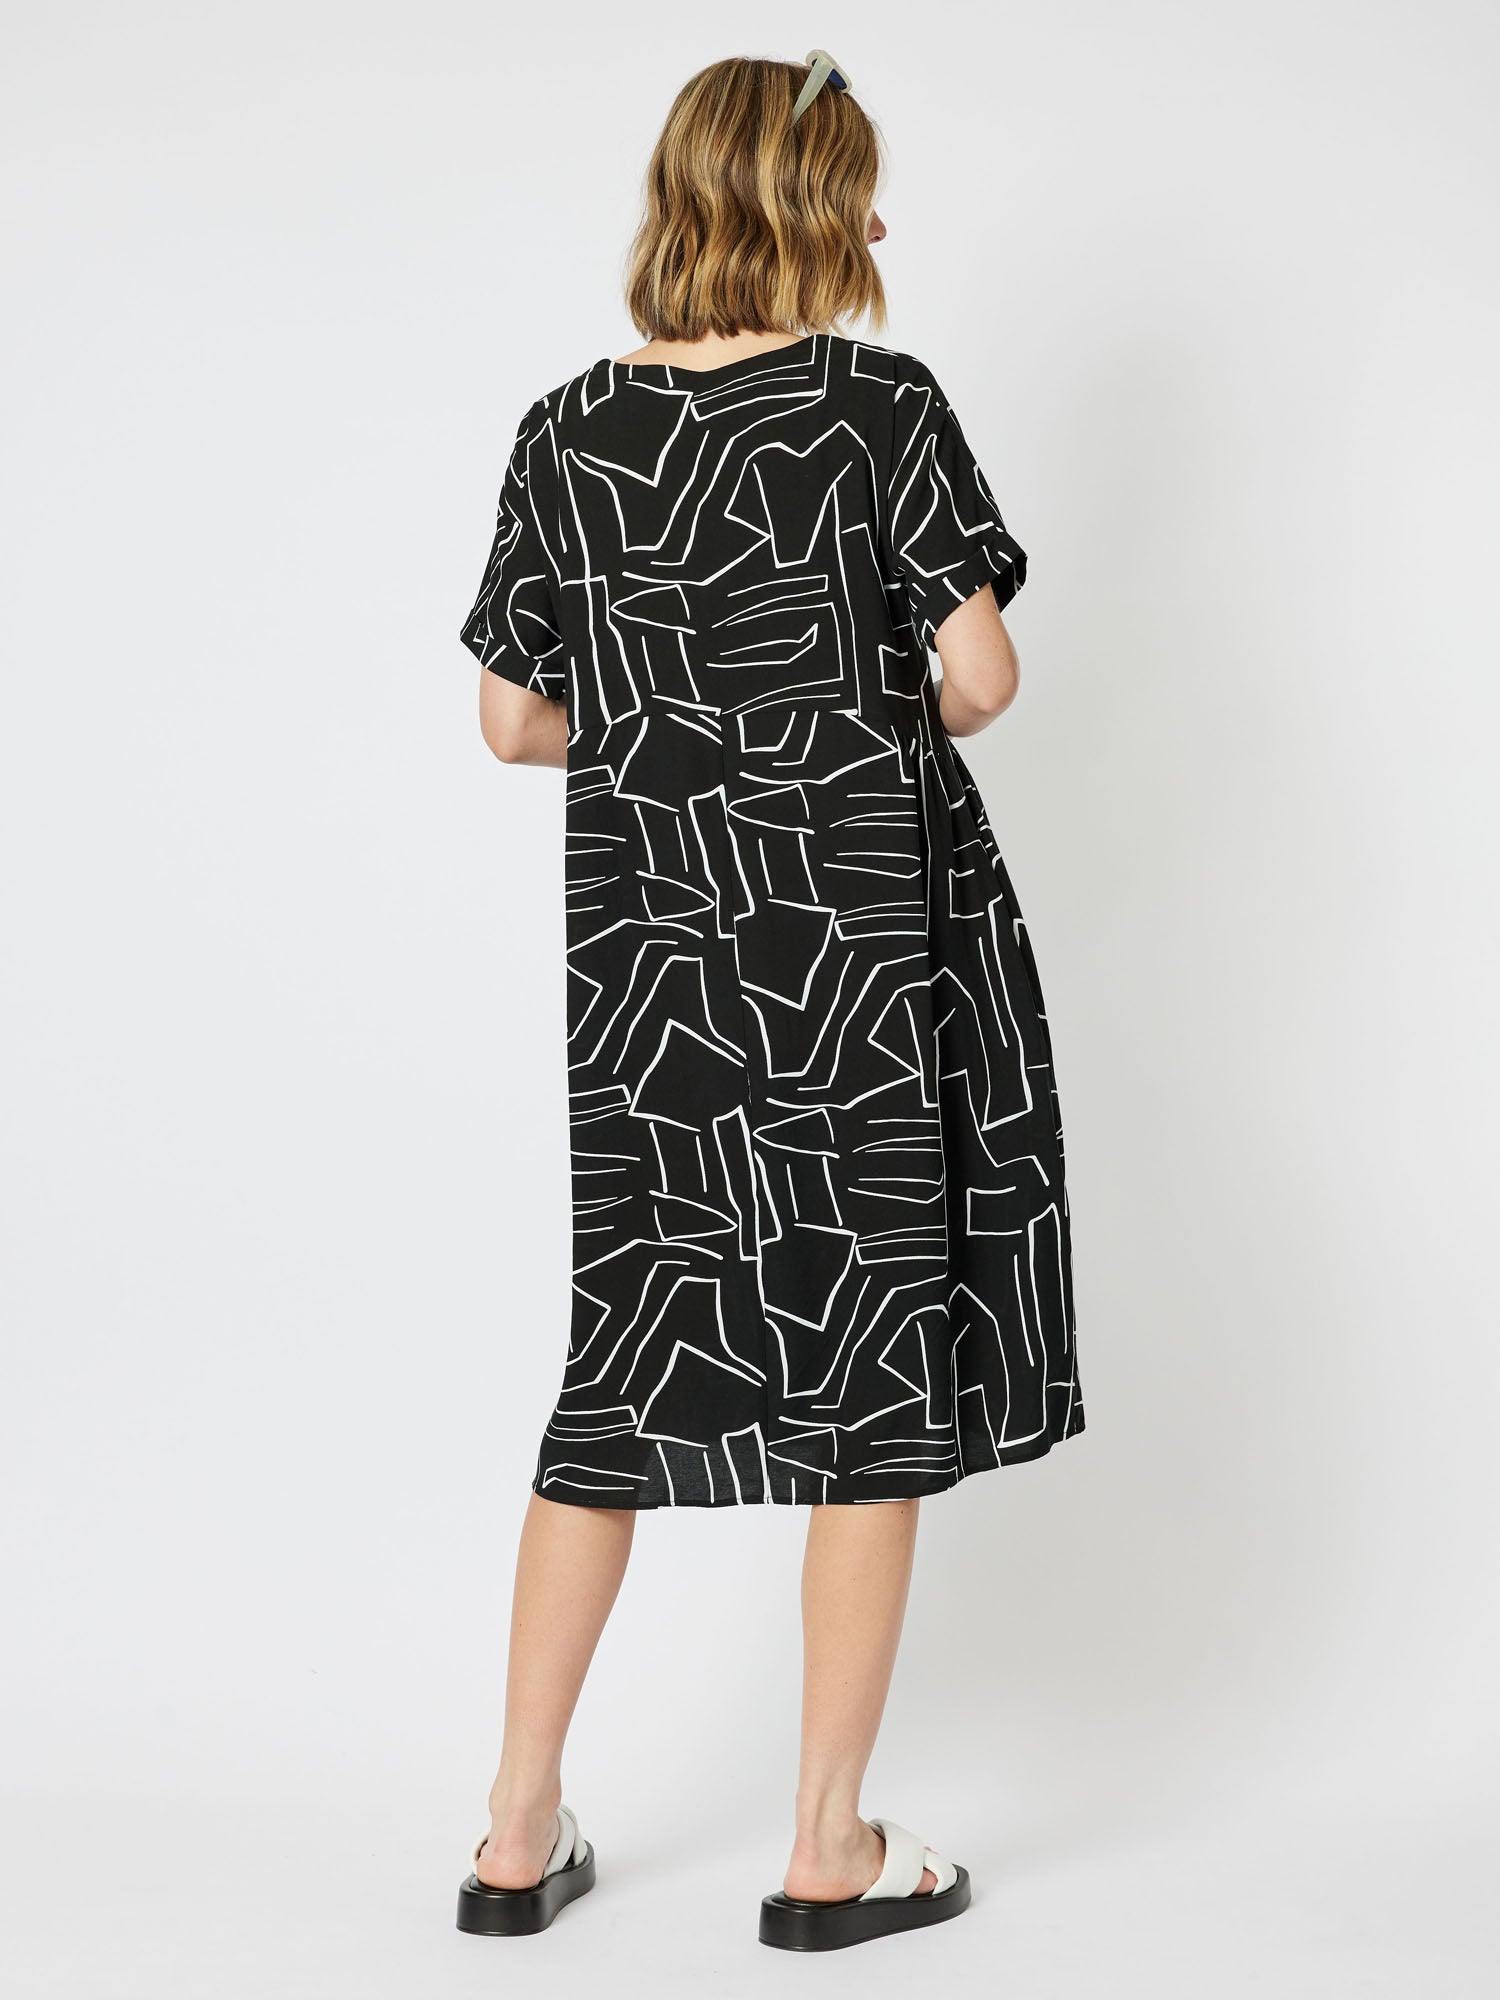 Empire Print Pocket Detail Short Sleeve Dress - Black